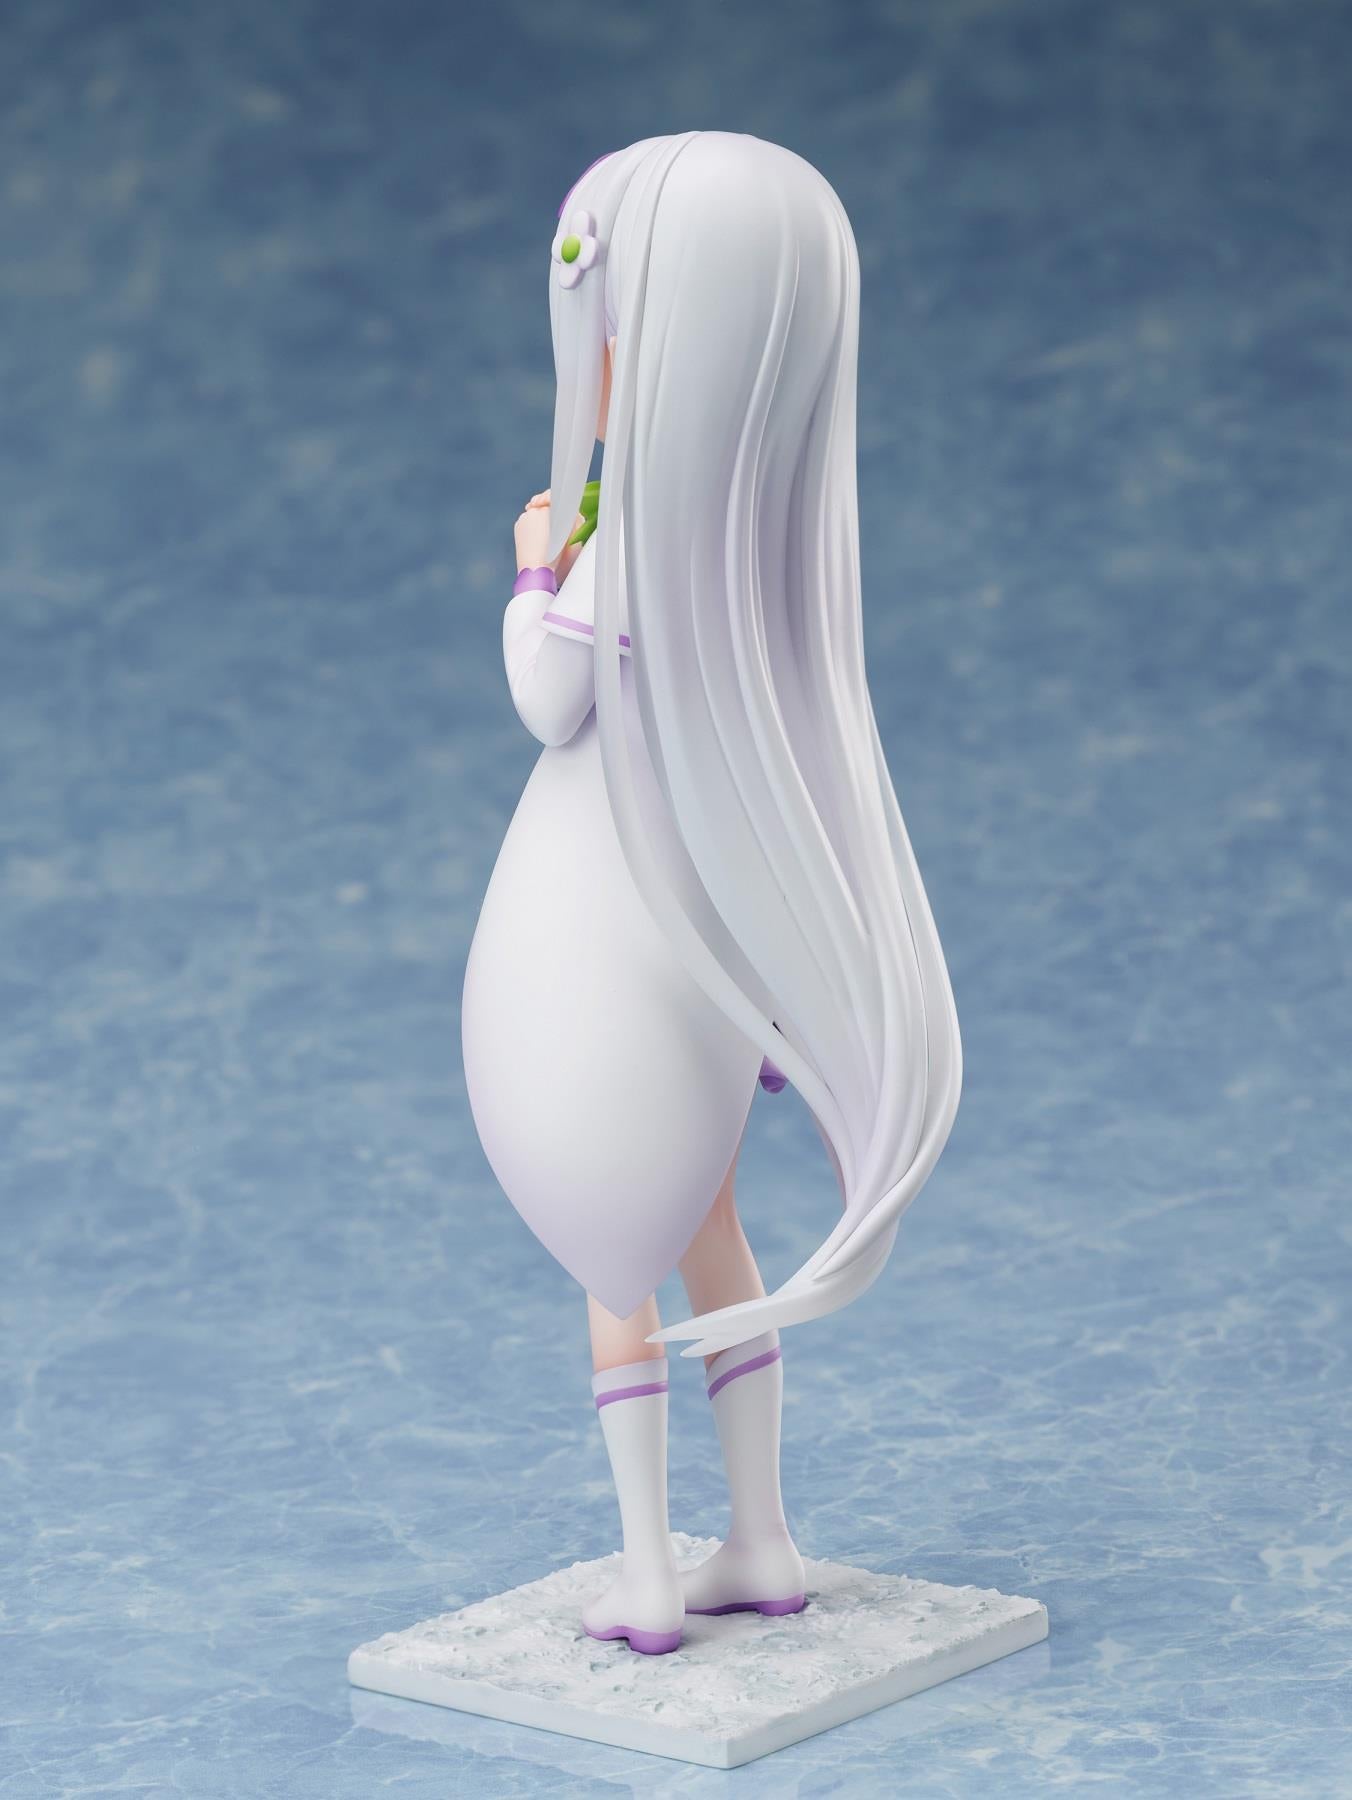 Re:Zero: Emilia -Memory of Childhood- 1/7 Scale Figure